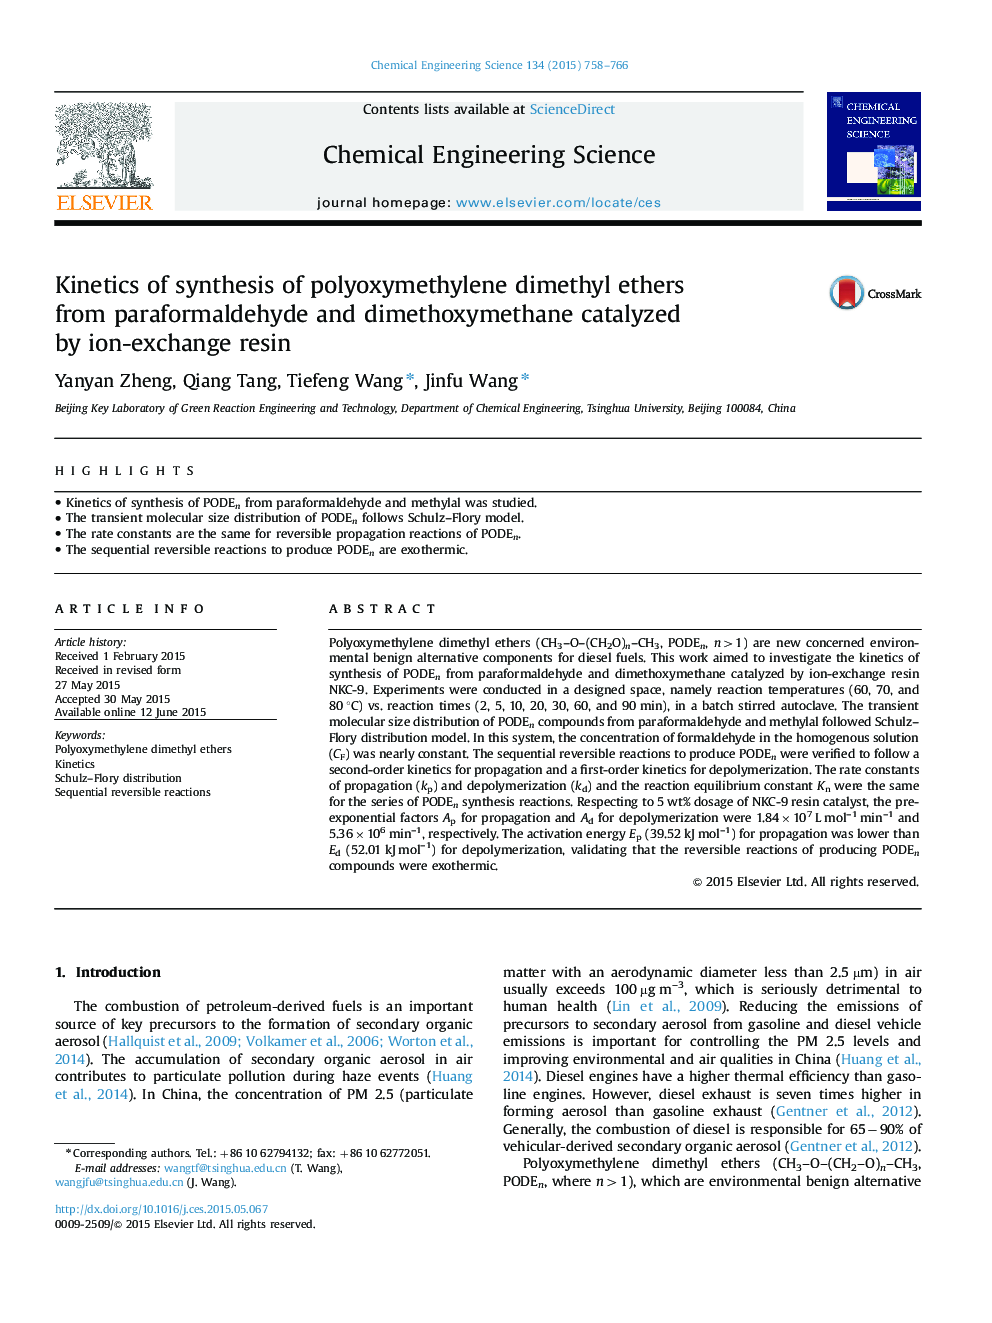 Kinetics of synthesis of polyoxymethylene dimethyl ethers from paraformaldehyde and dimethoxymethane catalyzed by ion-exchange resin